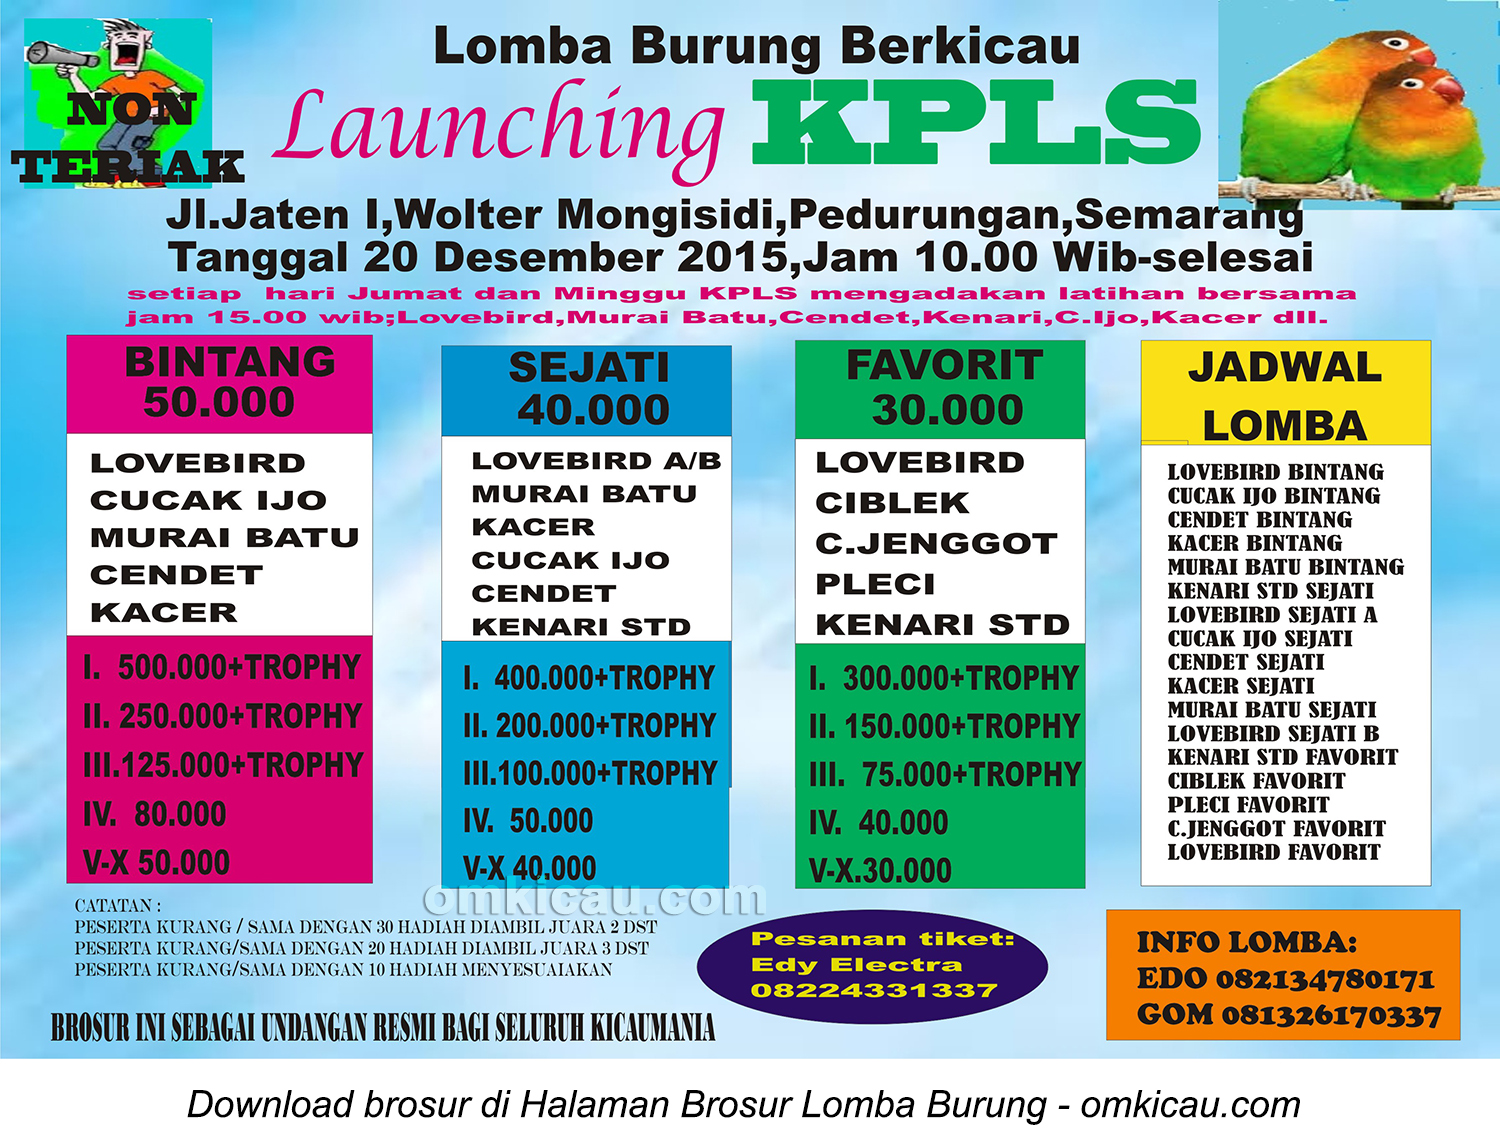 Brosur Lomba Burung Berkicau Launching KPLS, Semarang, 20 Desember 2015